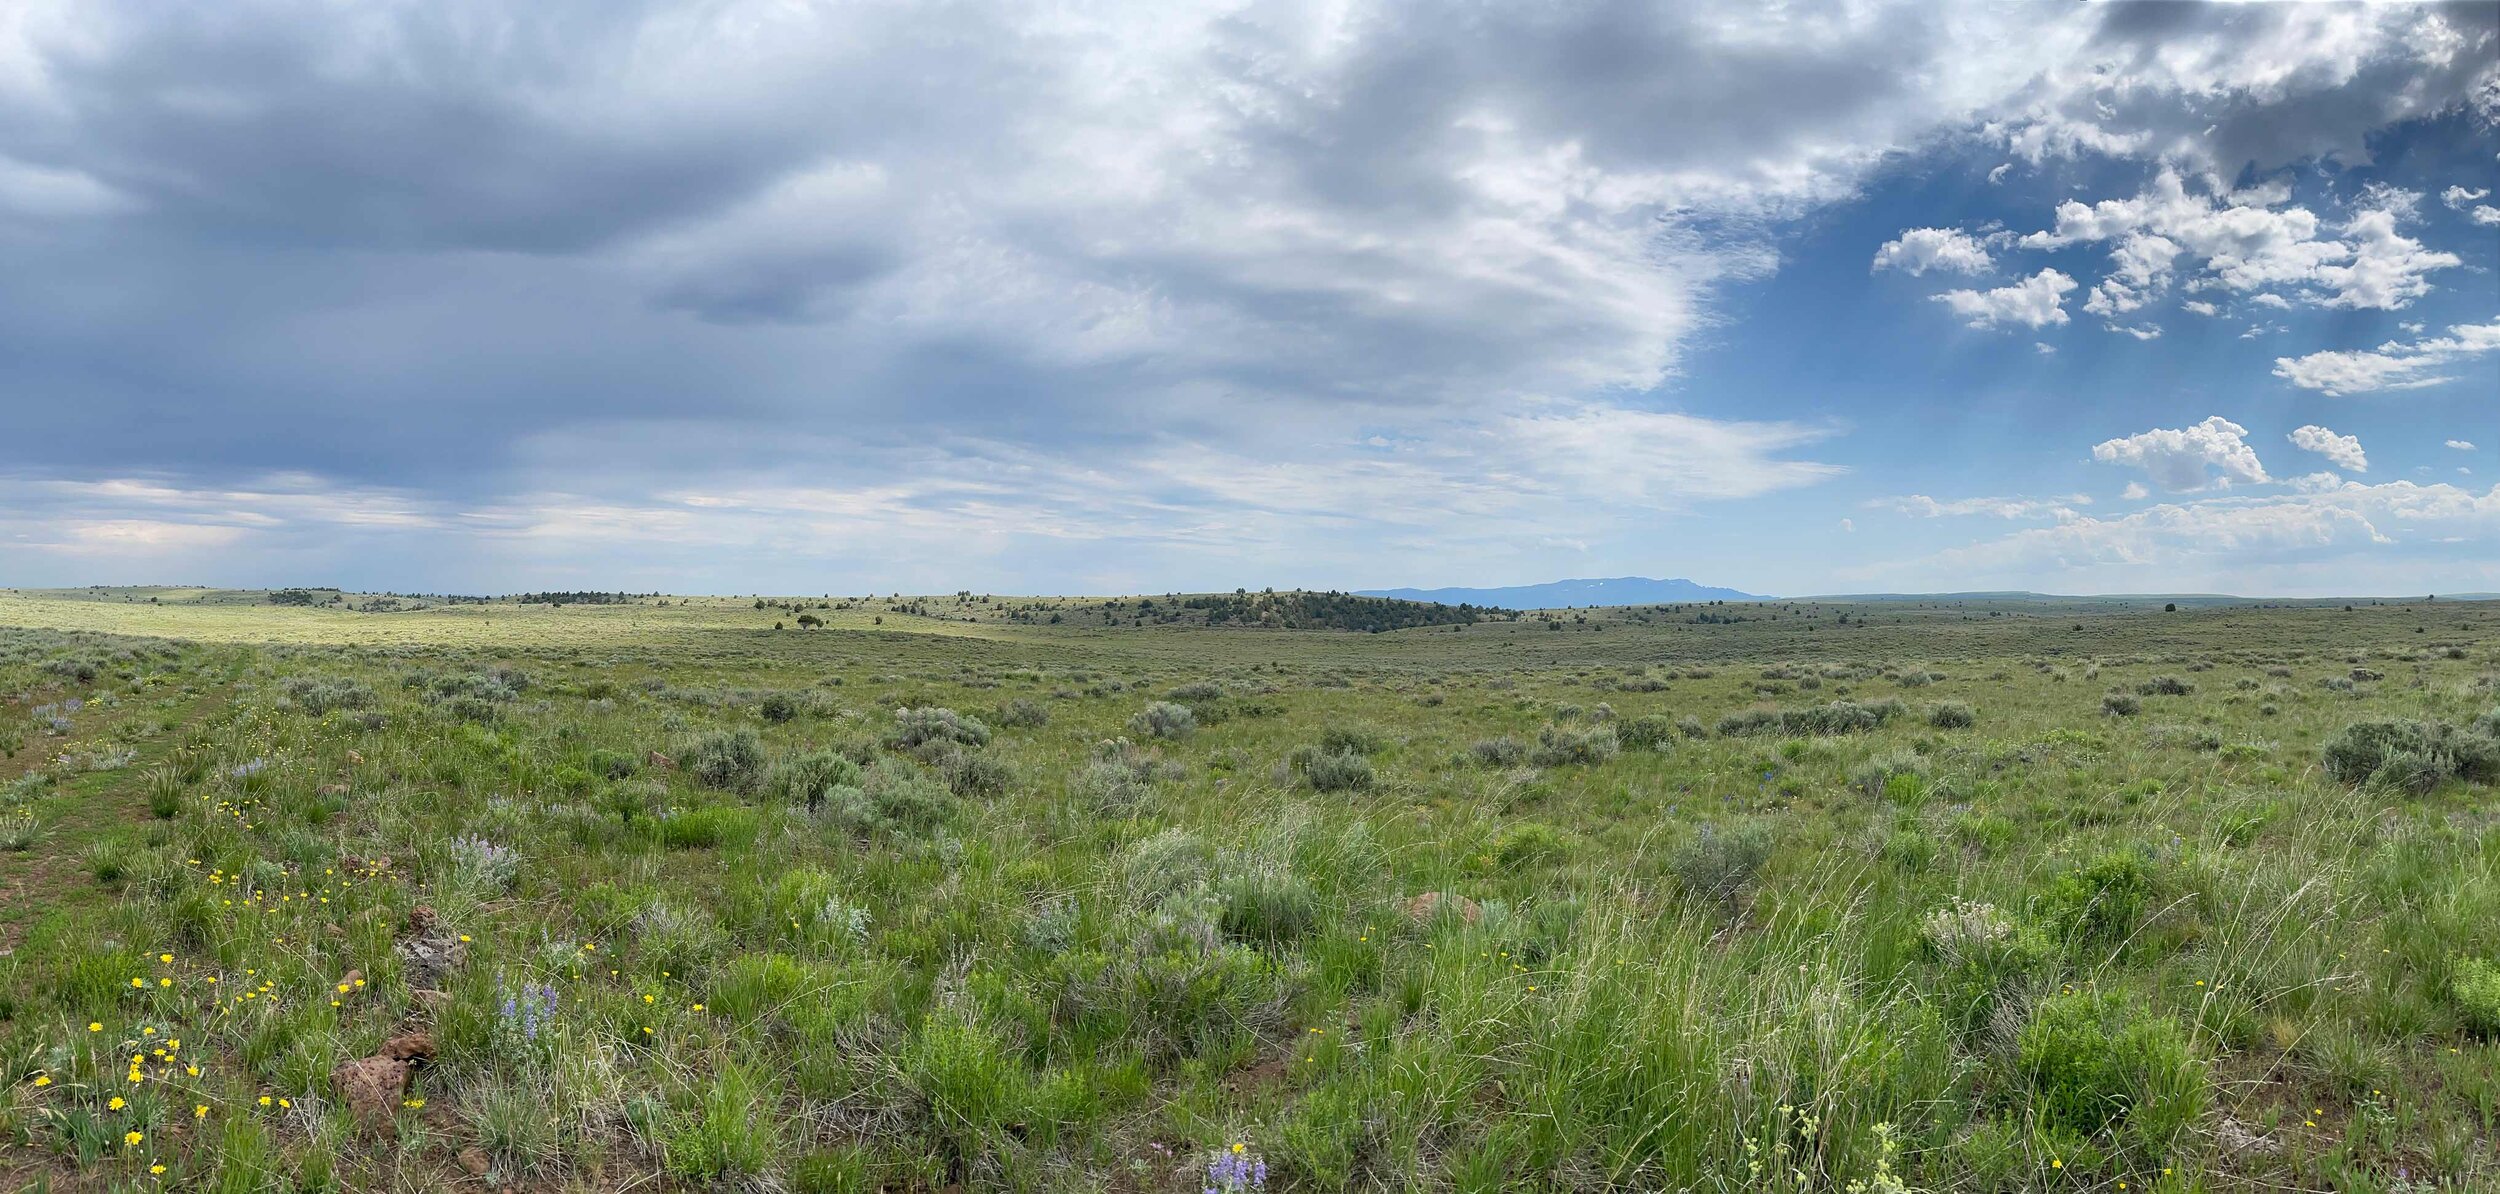  Panorama of green grasslands beneath grey clouds.  